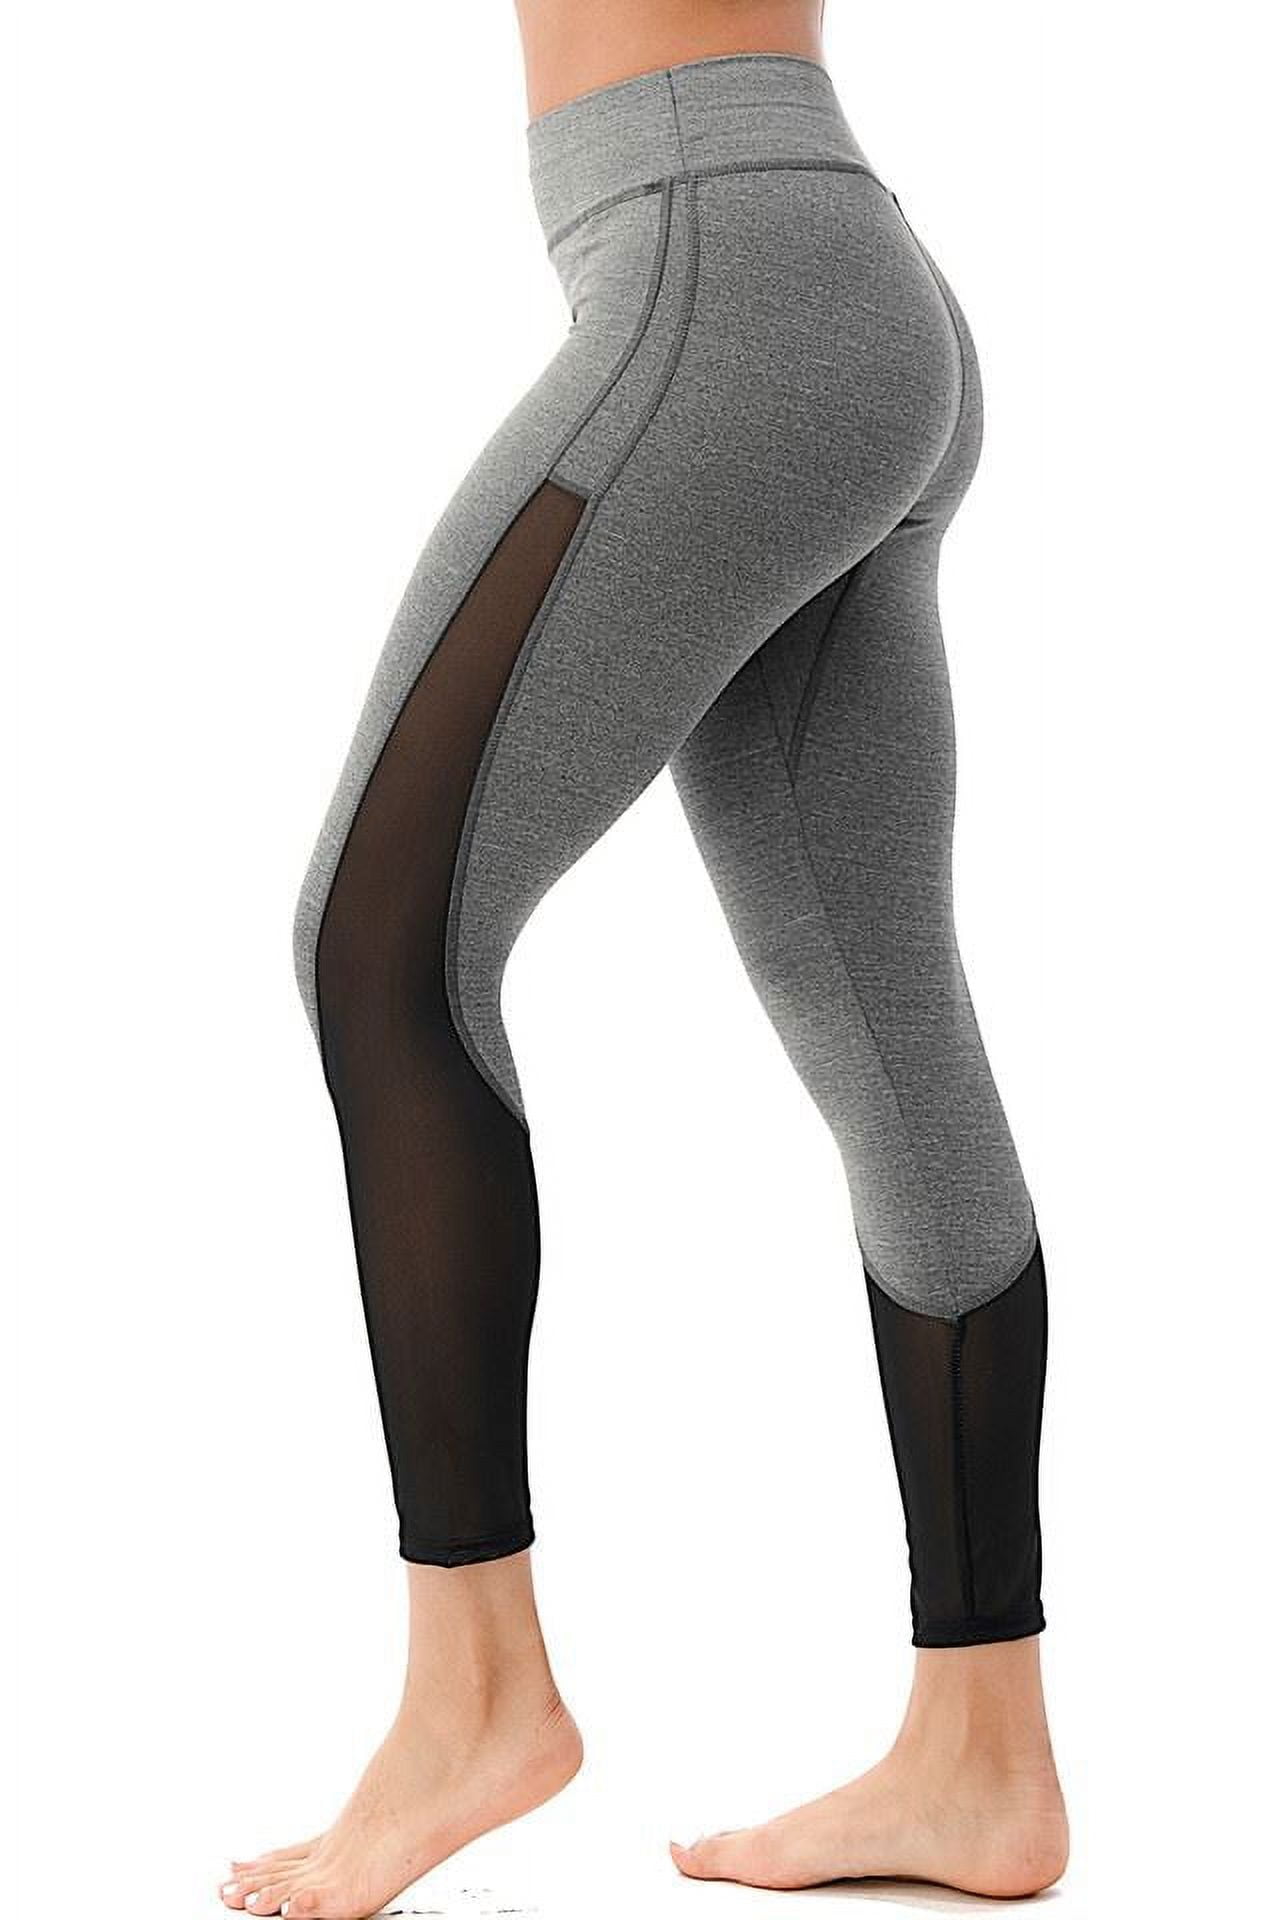 NWT $78 WomenX By Gottex Leggings Active Yoga Back Mesh Leggings Gray  Heather L